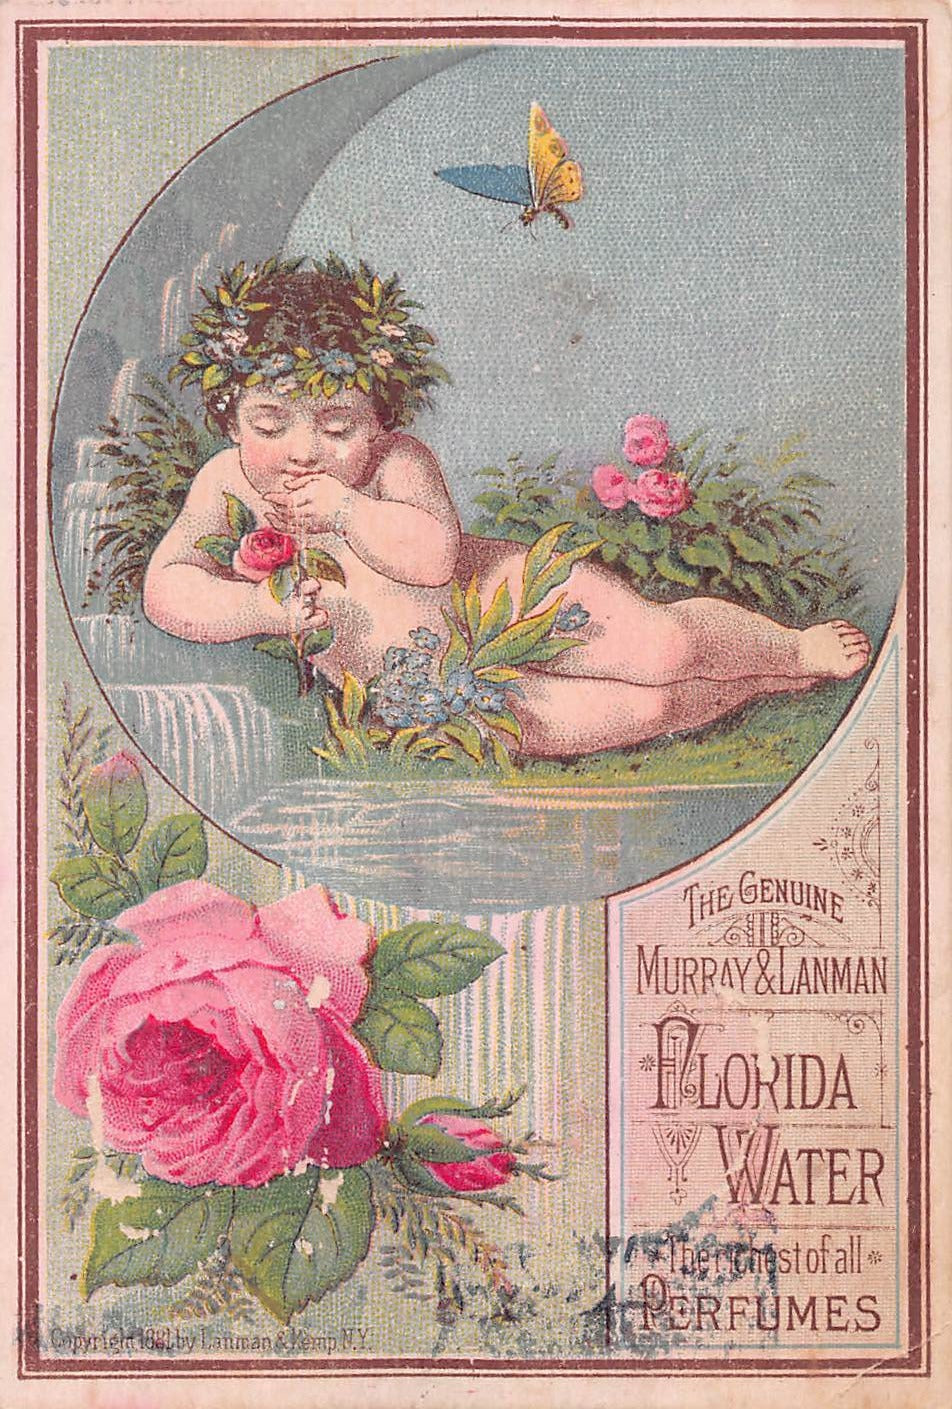 Florida Water, Perfume, Murray & Lanman, 1881 Early Trade Card